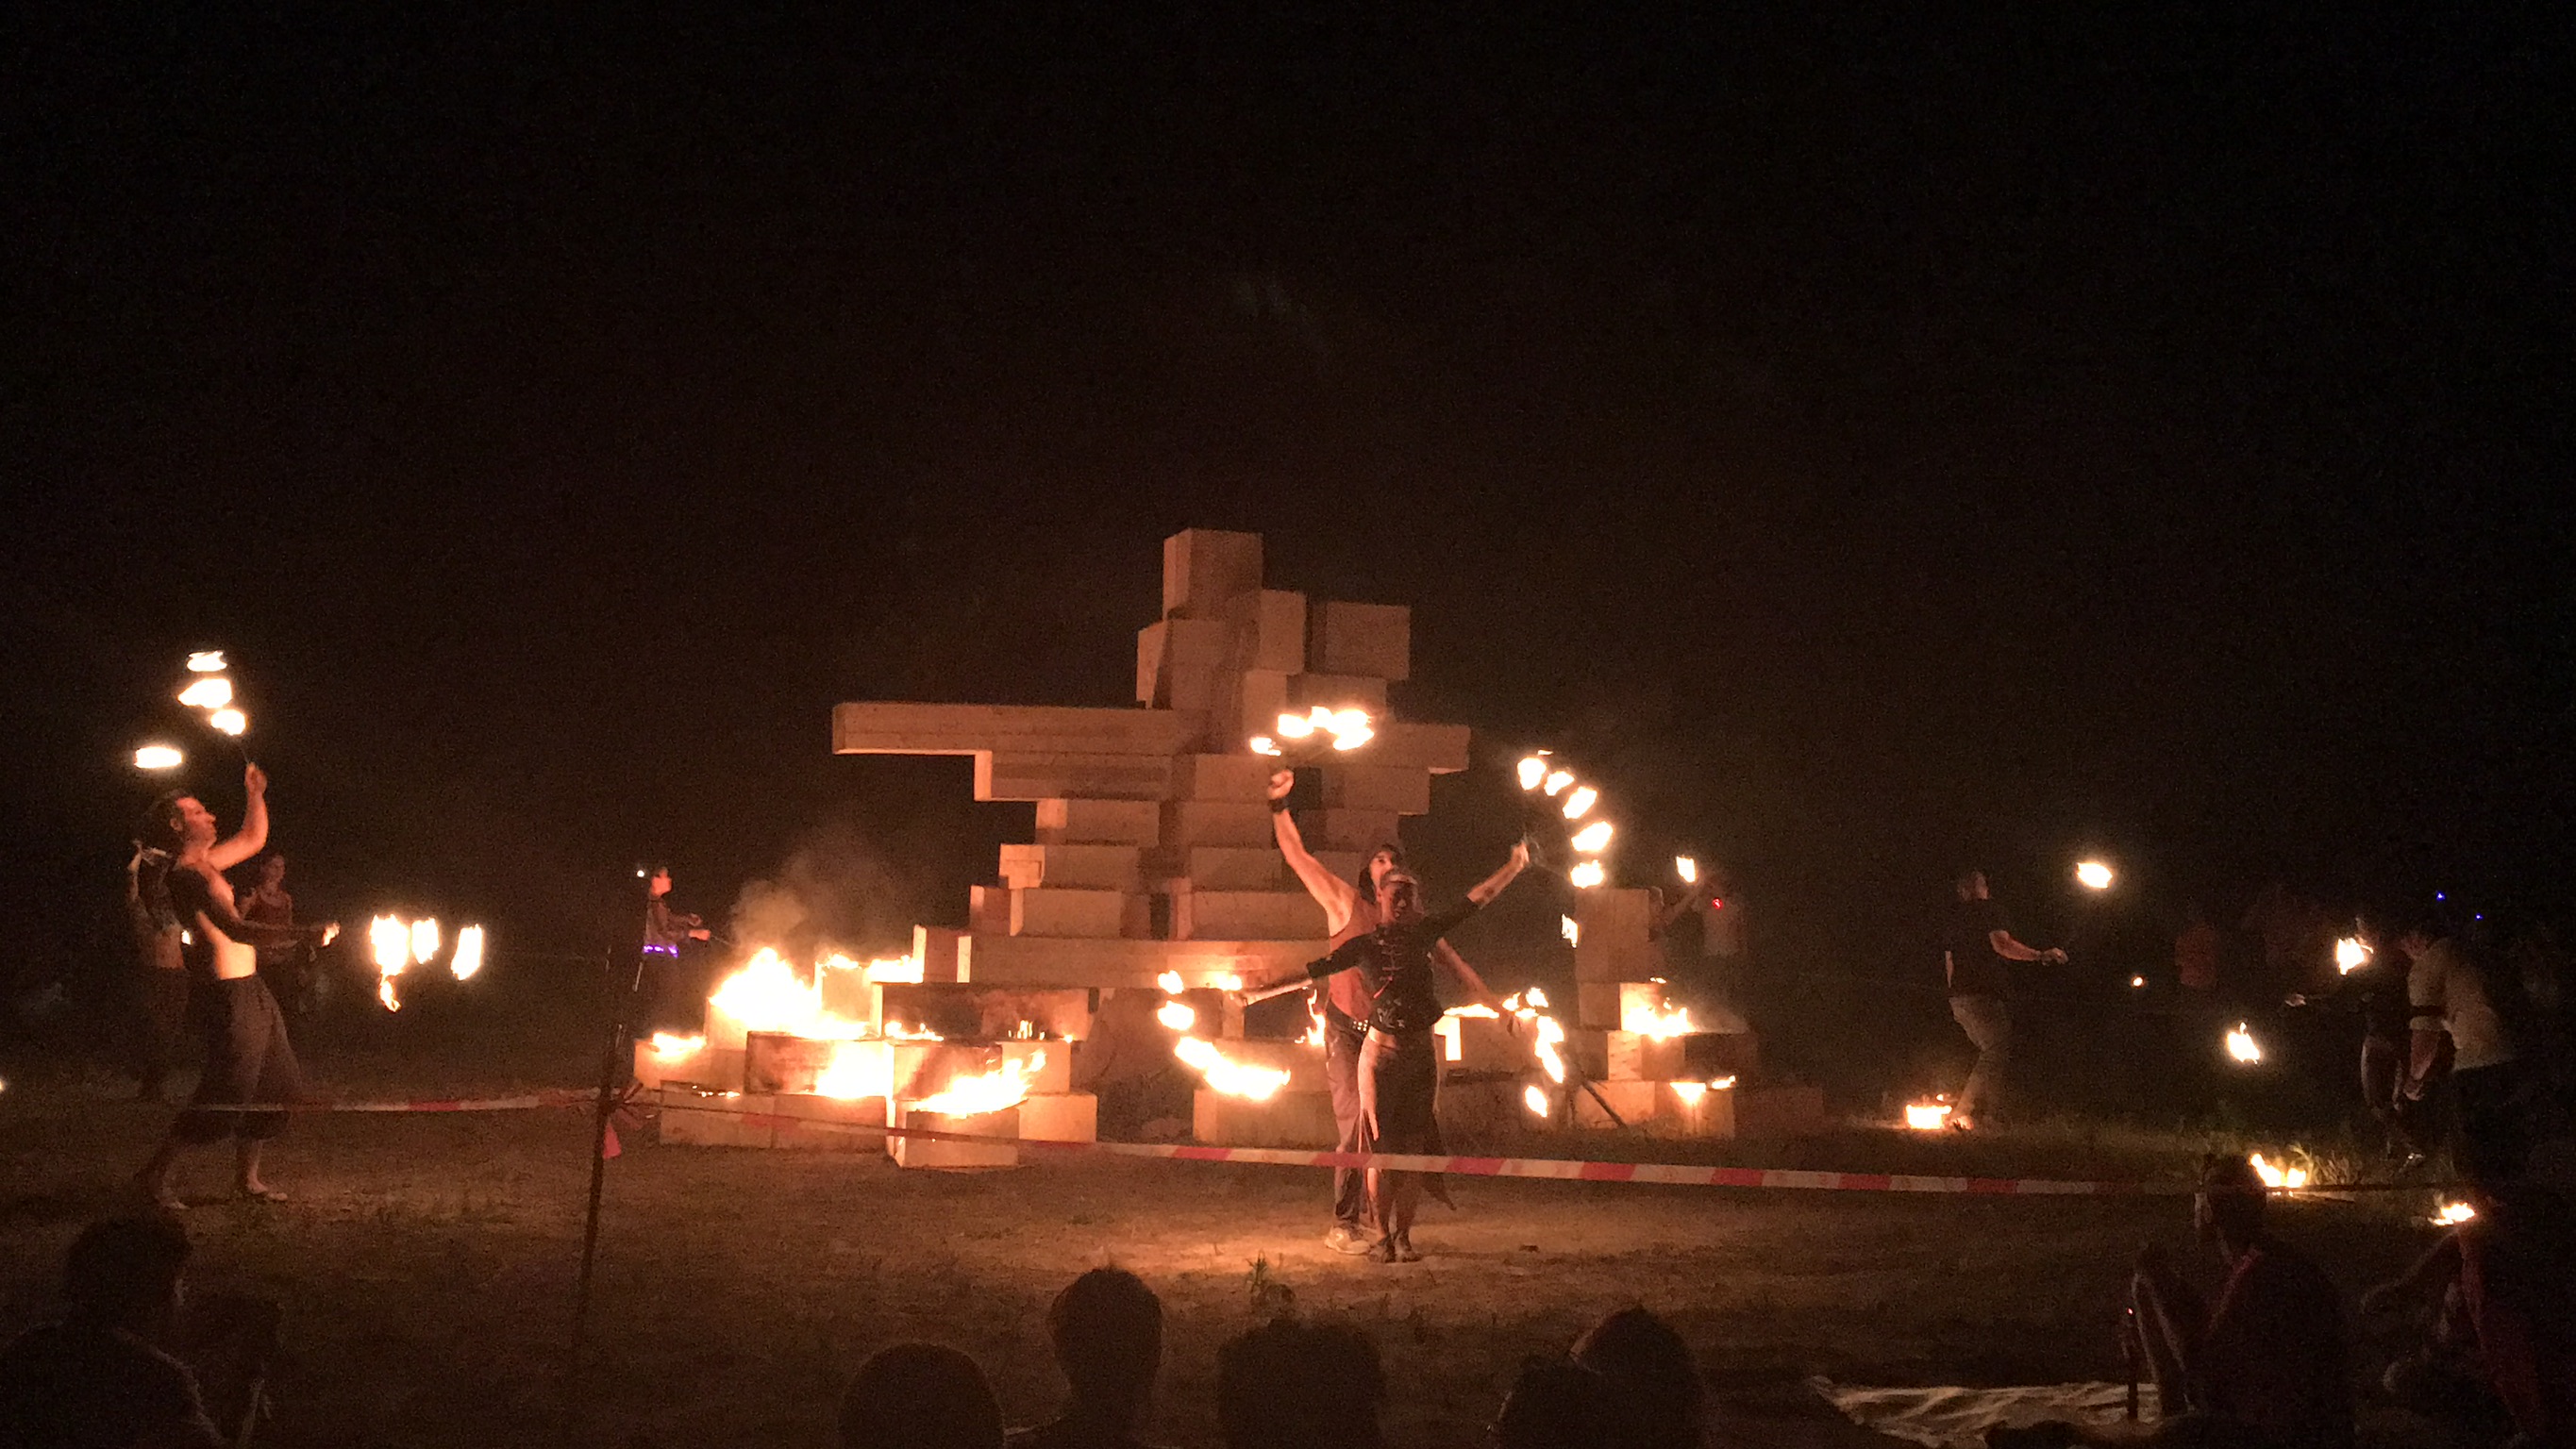 Effigy fire show - Picture by Kassandra Dambacher-Willis